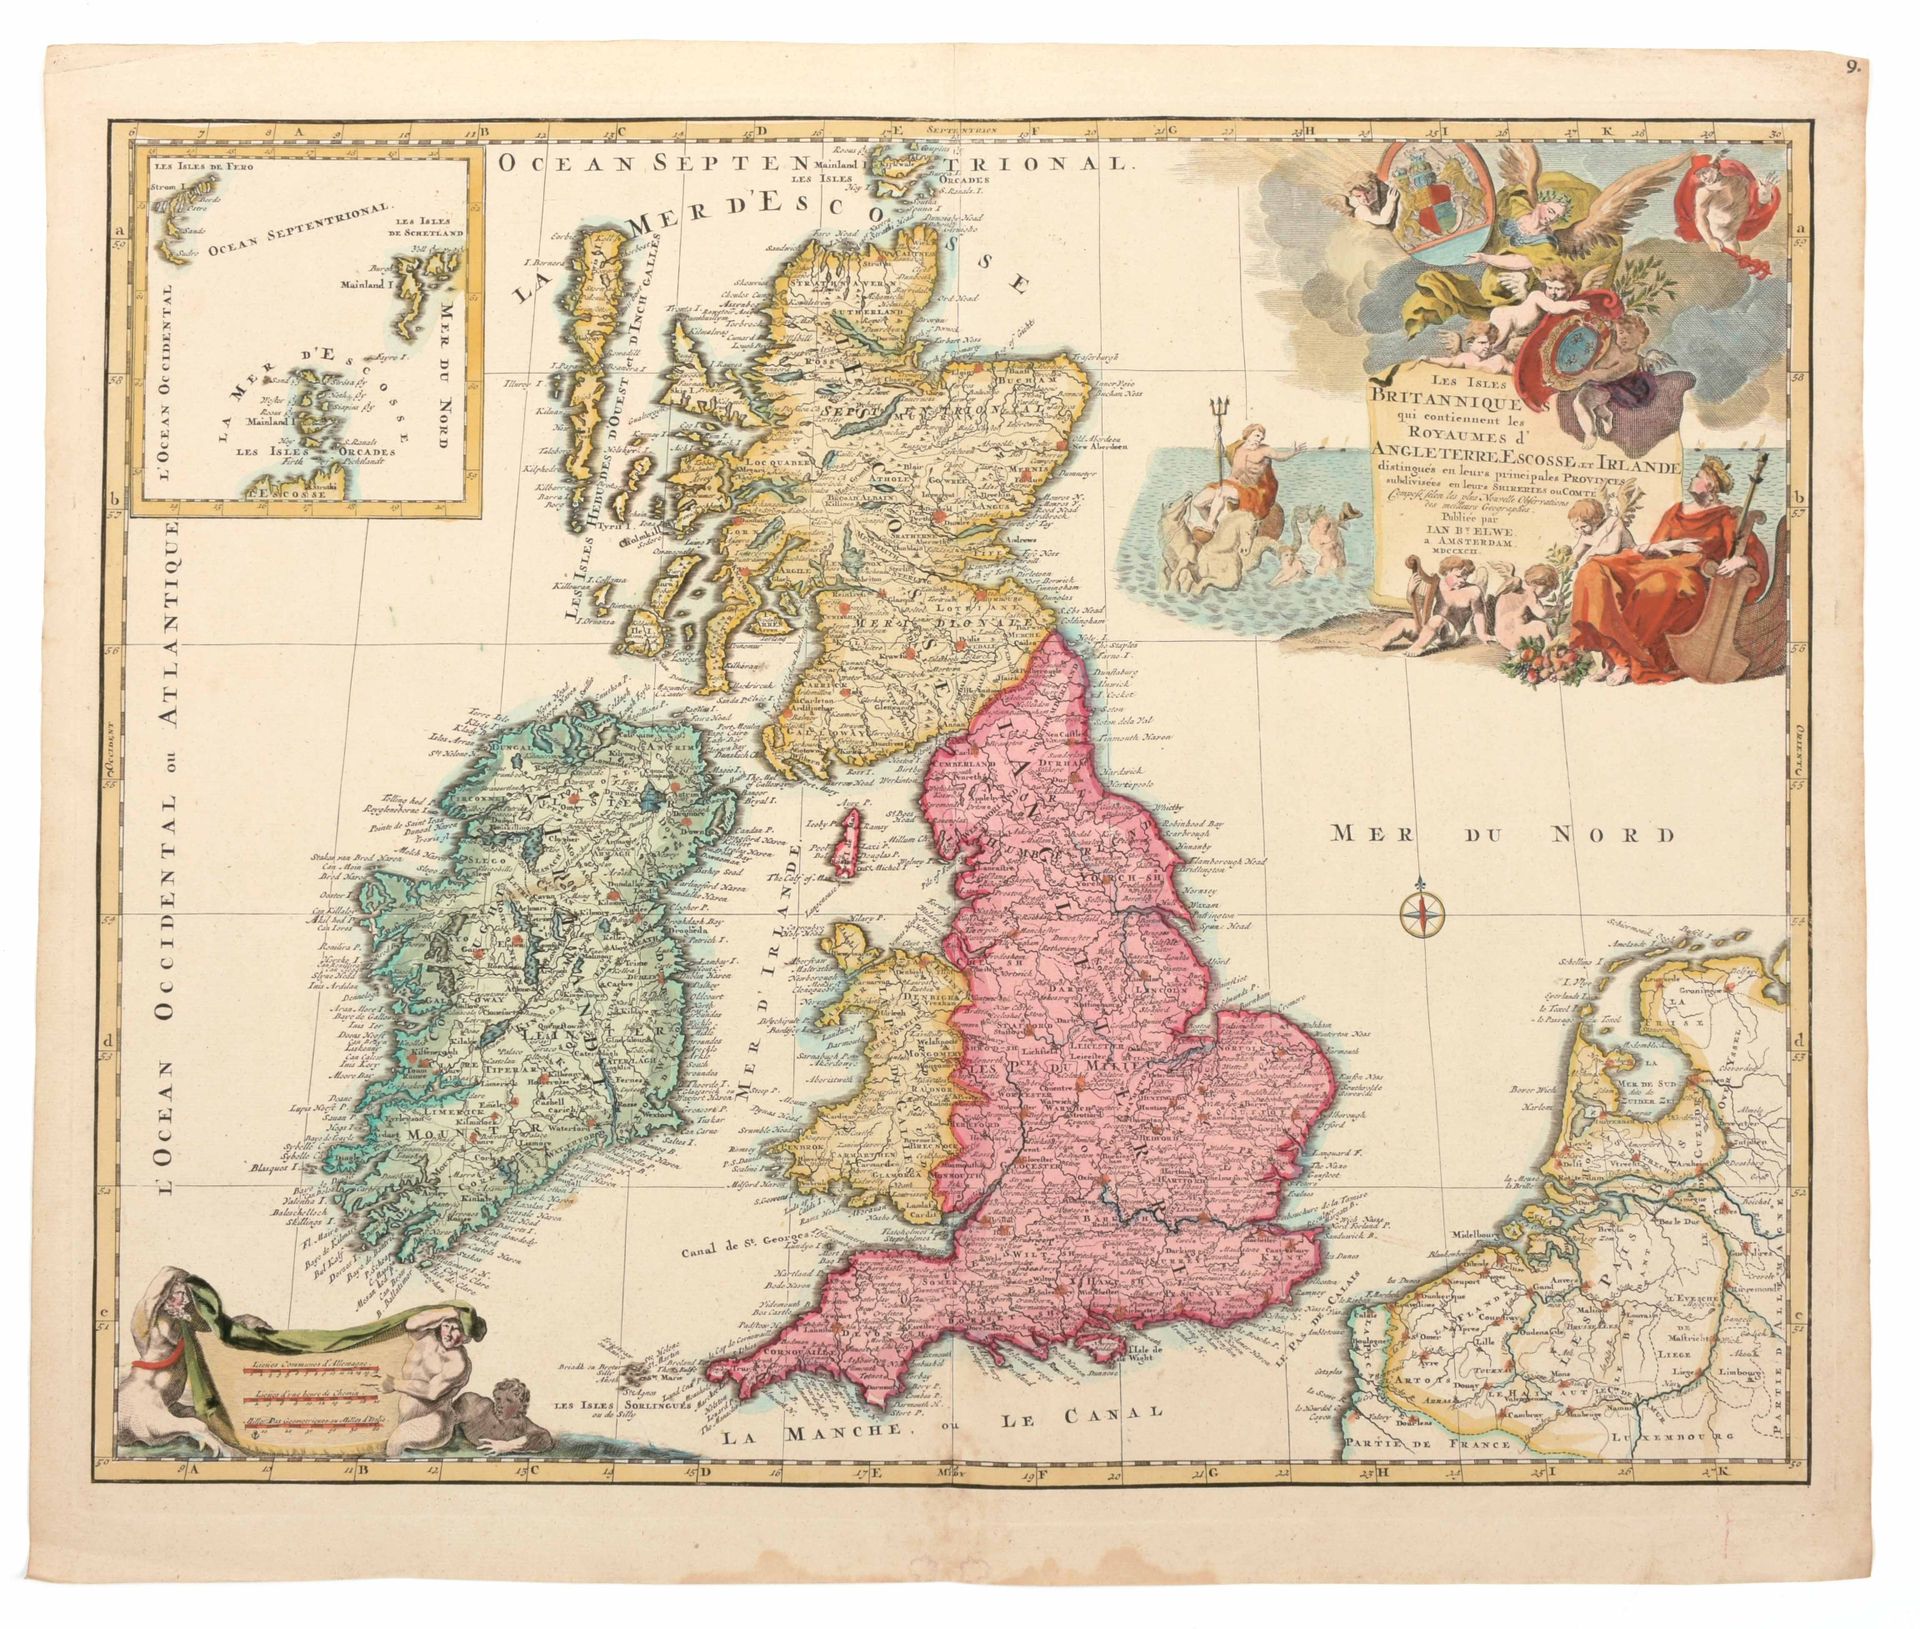 [GREAT BRITAIN] 包含英格兰、苏格兰和爱尔兰王国的不列颠群岛

原版手绘地图(49 x 61 cm)，由Jan B。埃尔维（阿姆斯特丹，1792年